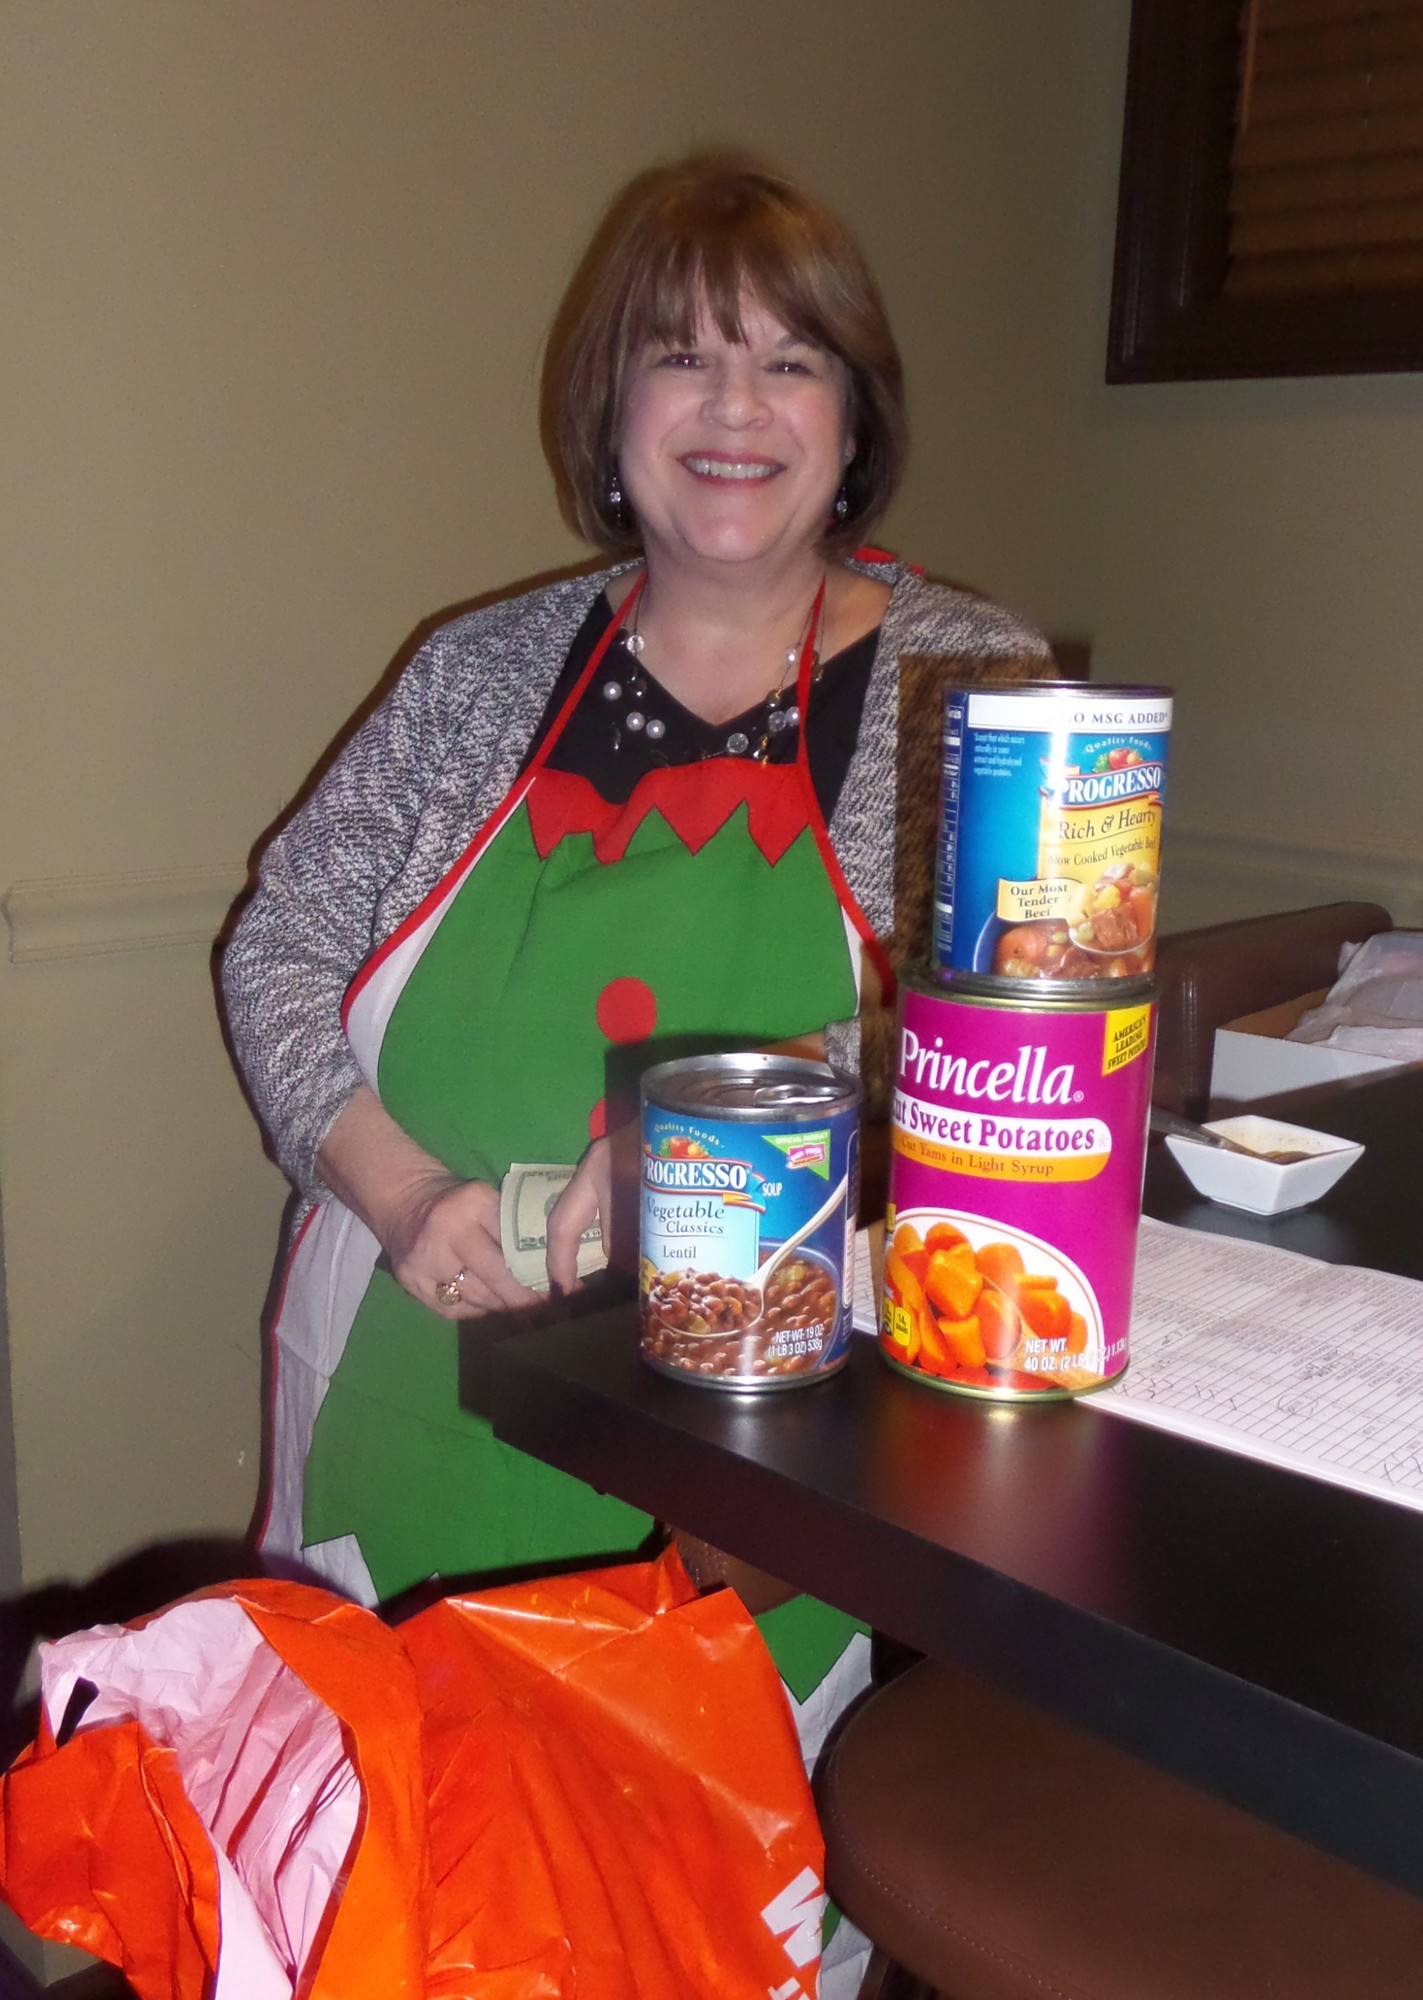 Santa’s helper Linda Stephenson collected donations of food at the door.